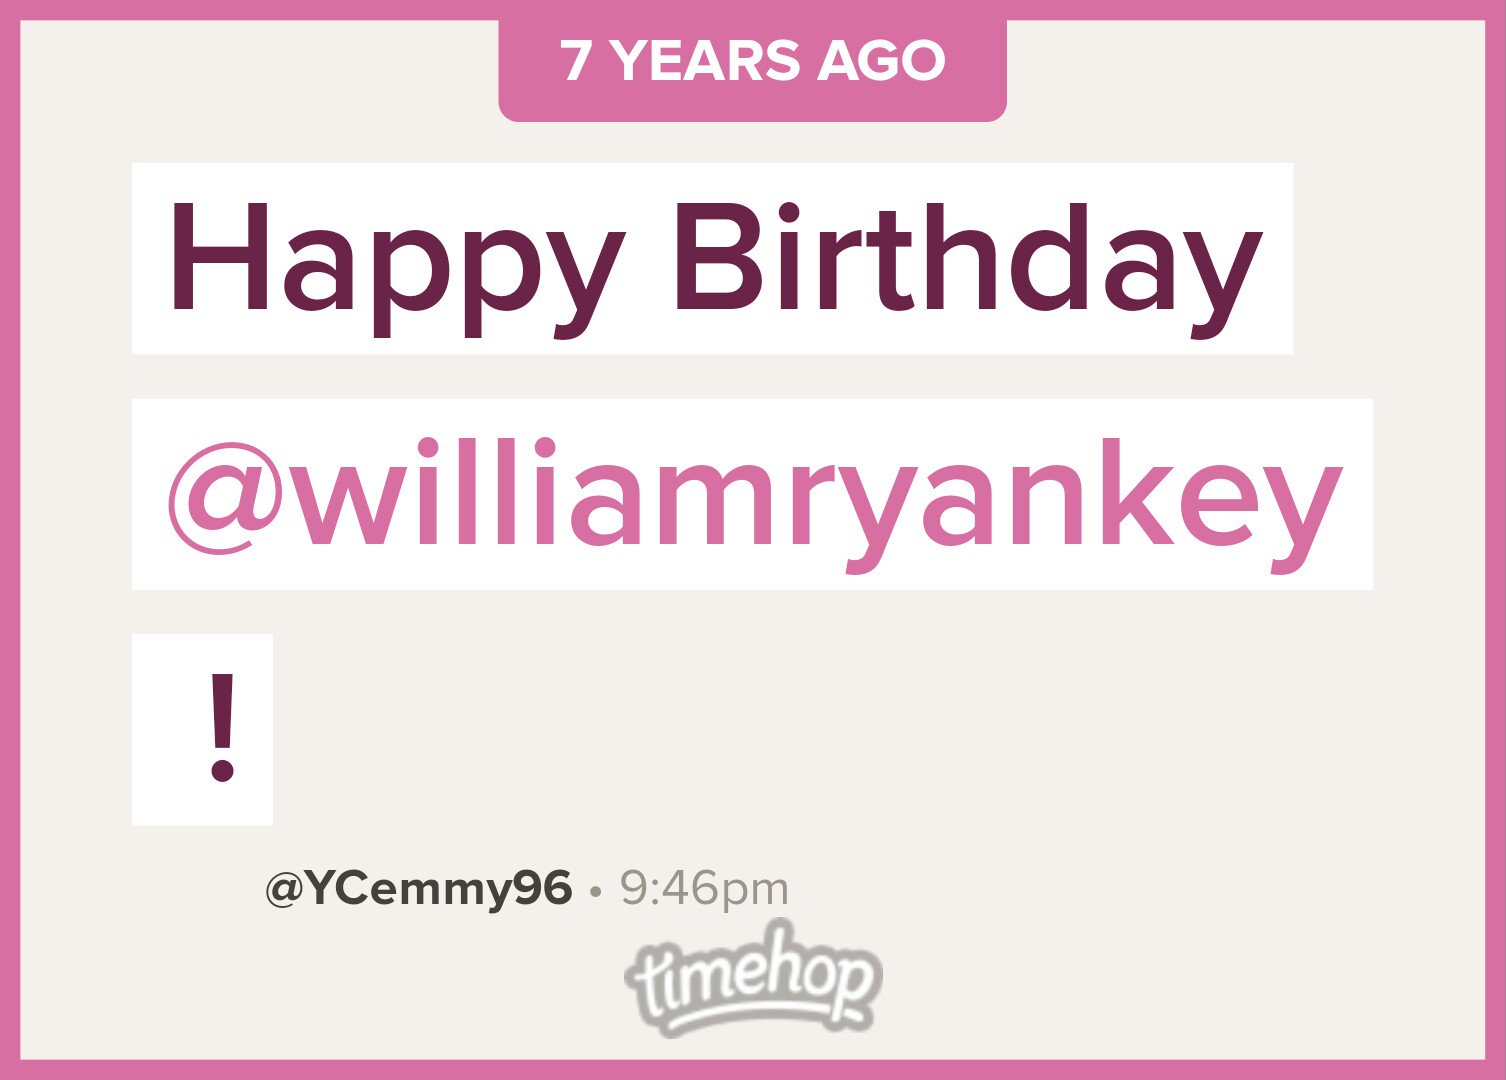 Literally my first message ever was to tell Ryan Key happy birthday. 

Happy birthday 